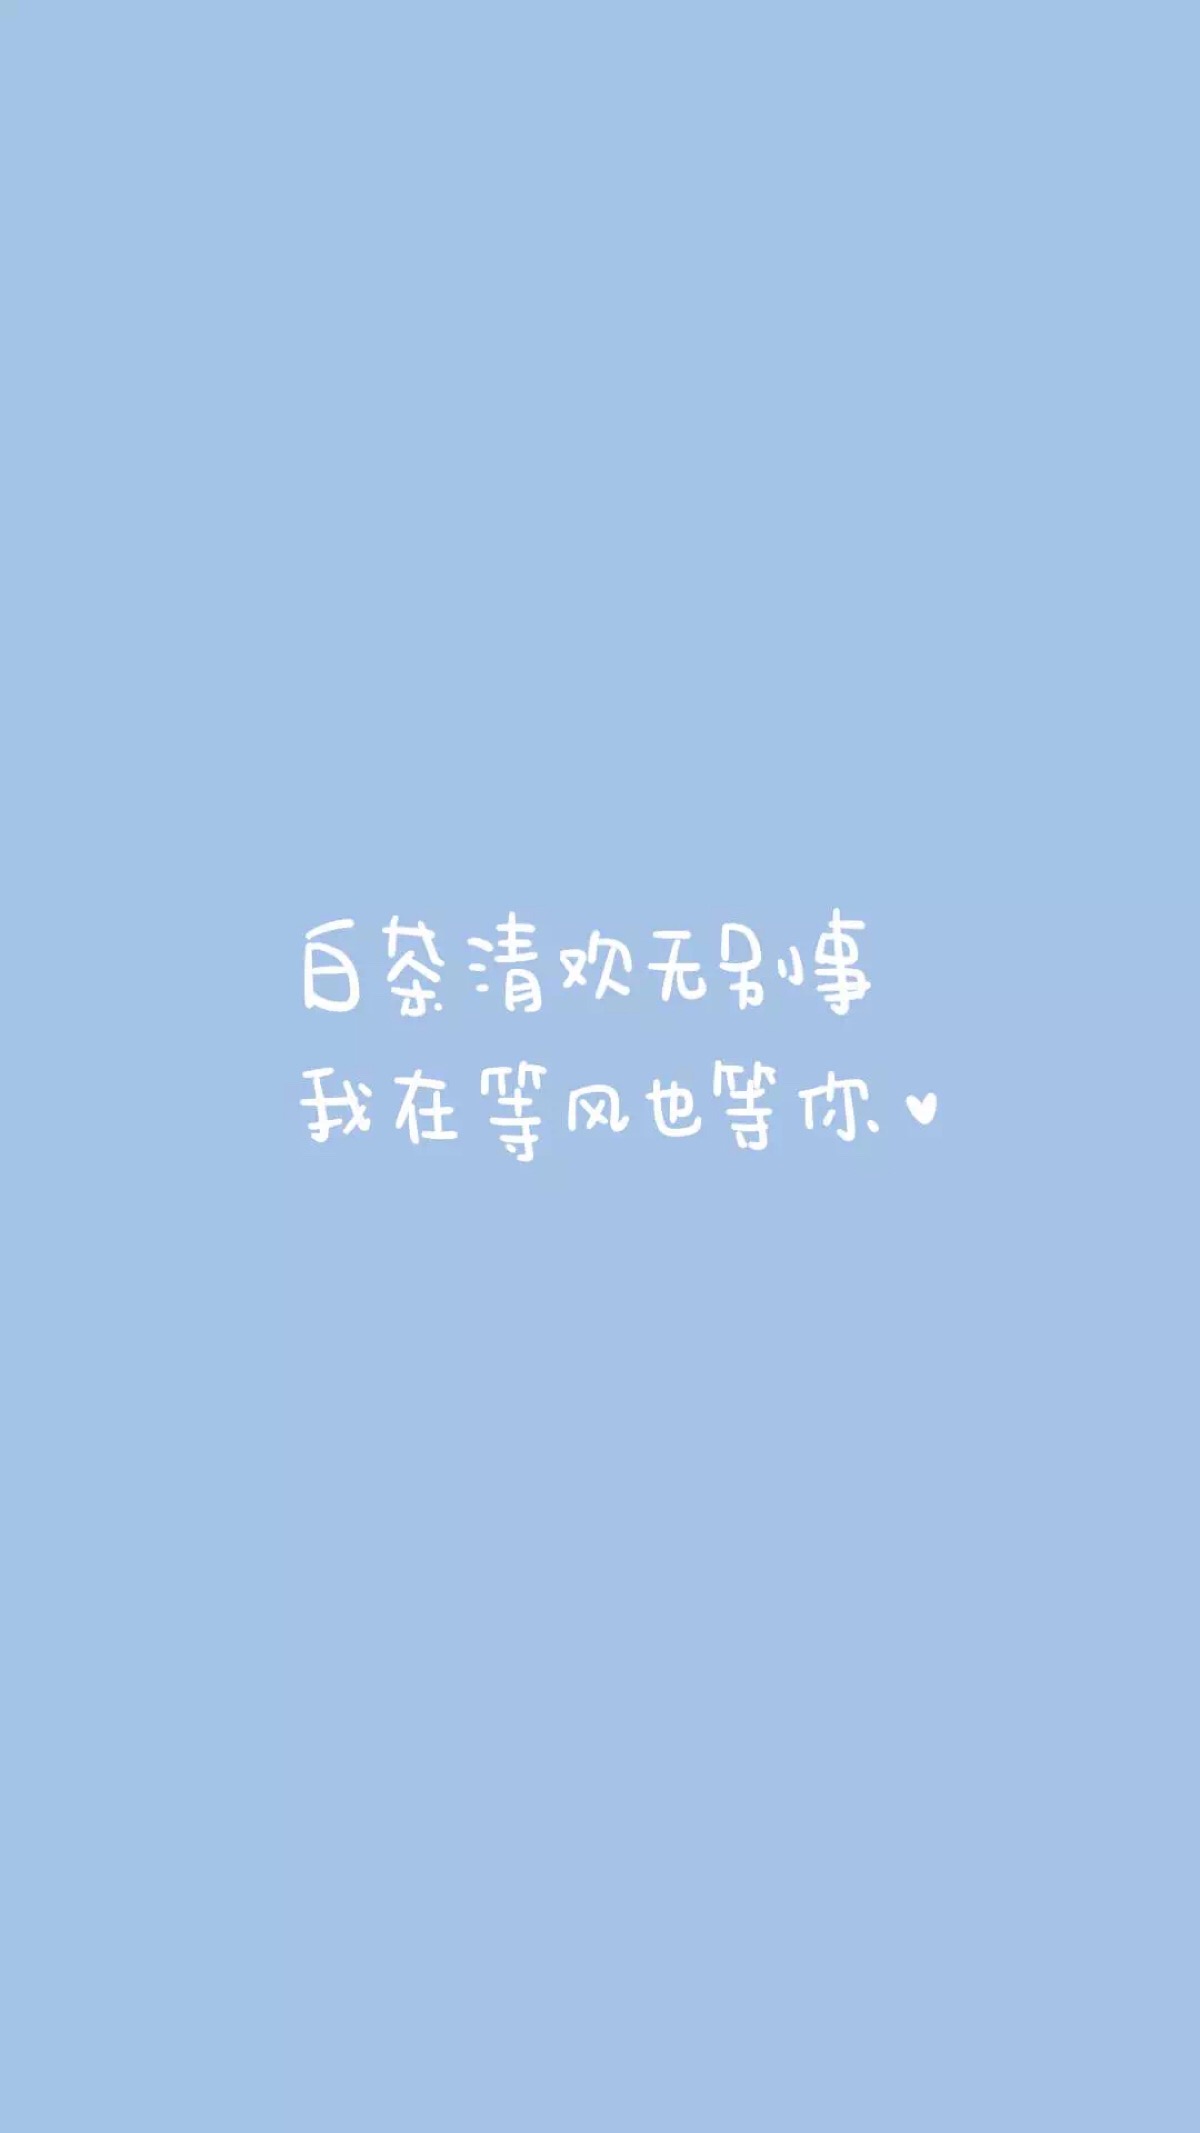 from晚安荼蘼 手写句子 文字壁纸 锁屏 情话 文素